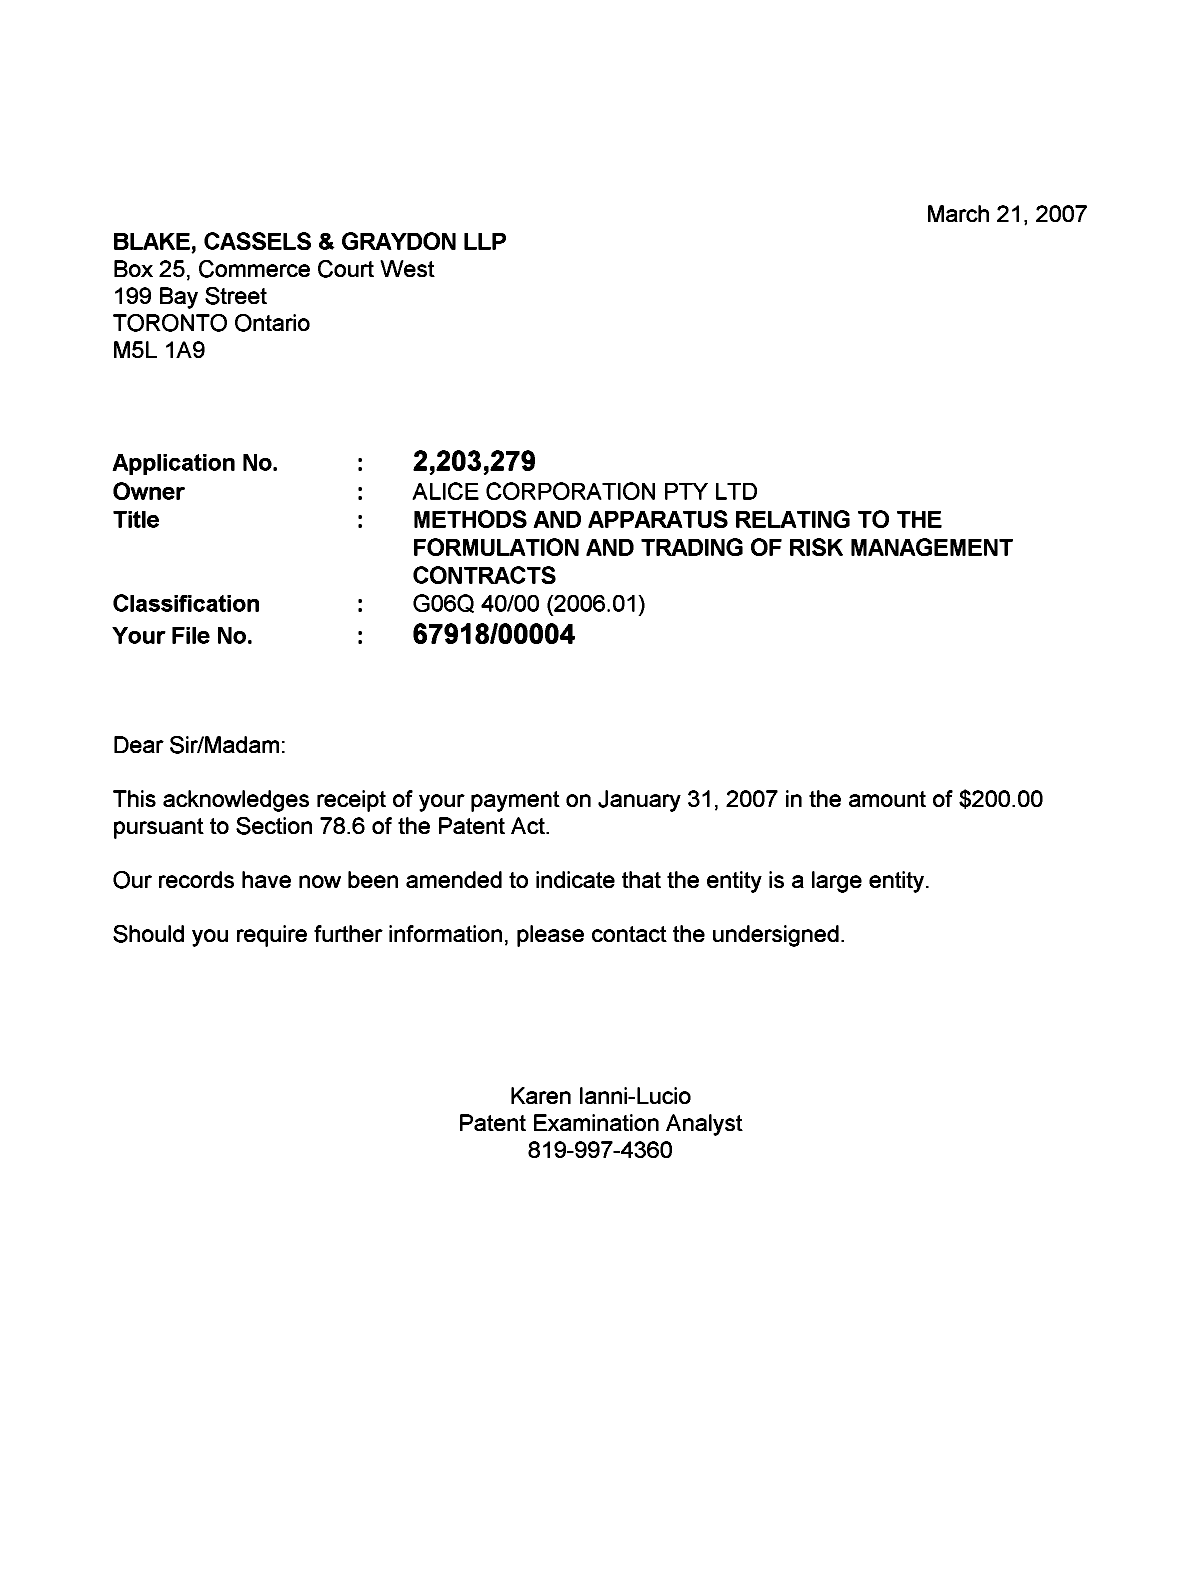 Canadian Patent Document 2203279. Correspondence 20061221. Image 1 of 1